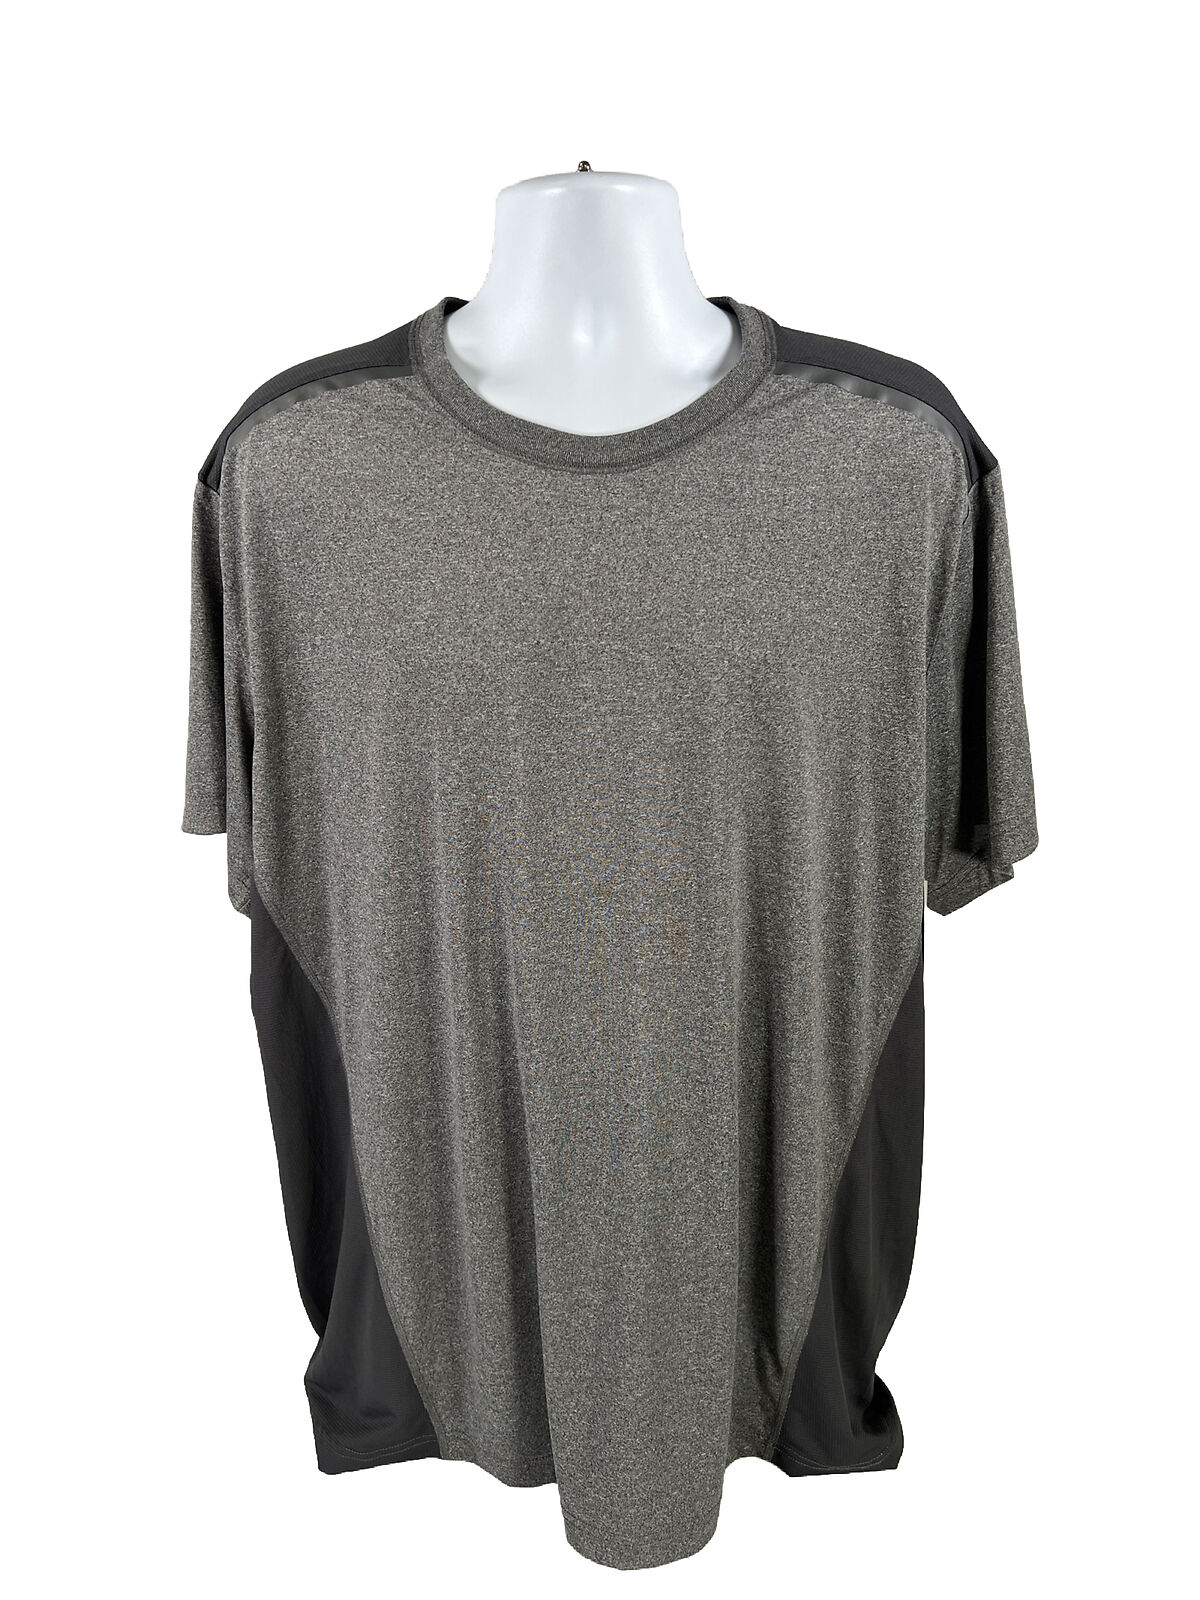 NUEVA camiseta deportiva de manga corta gris MSX Michael Strahan para hombre - Tall XLT